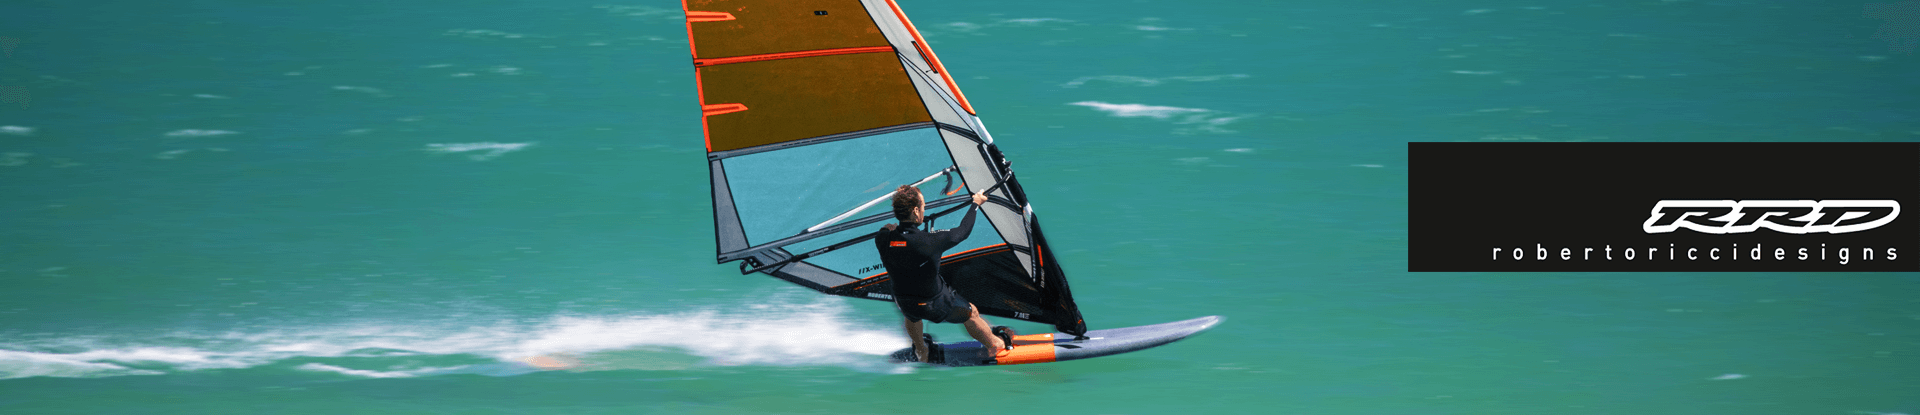 RRD značka obrazek windsurfing karlin